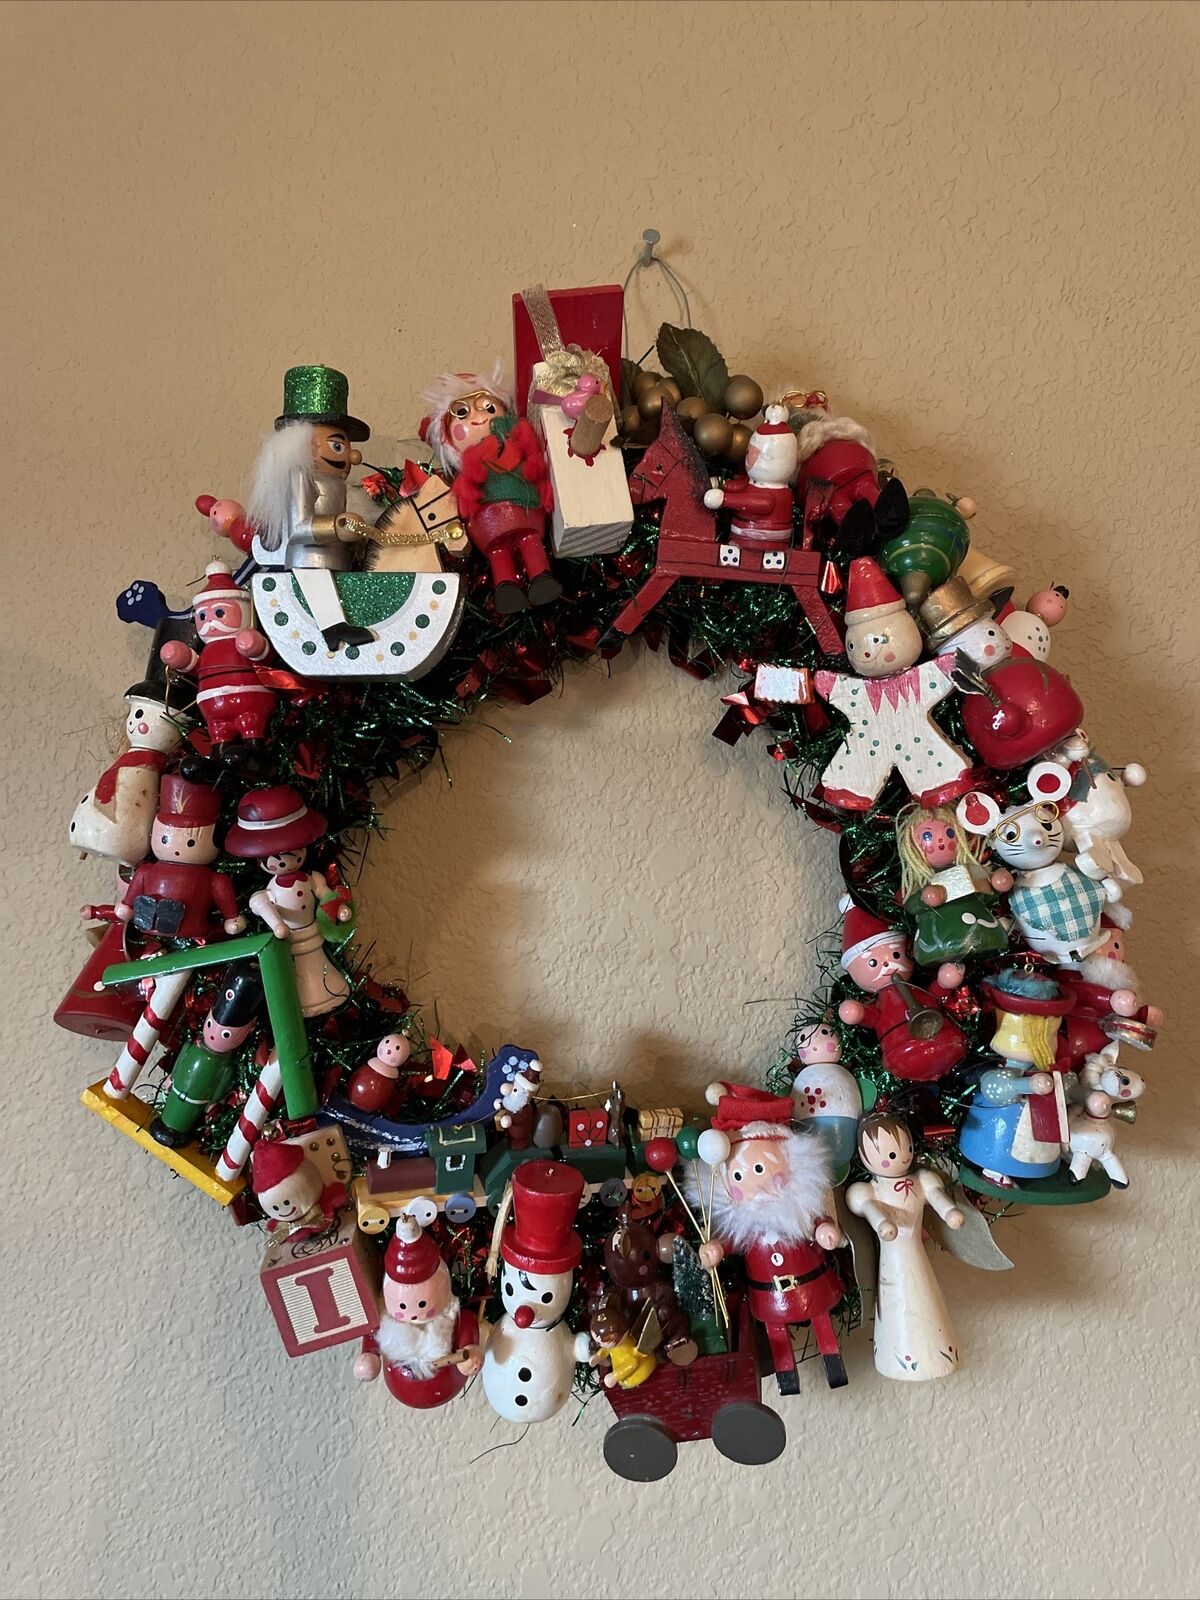 14” Handmade Vintage Wooden Christmas Ornament Wreath